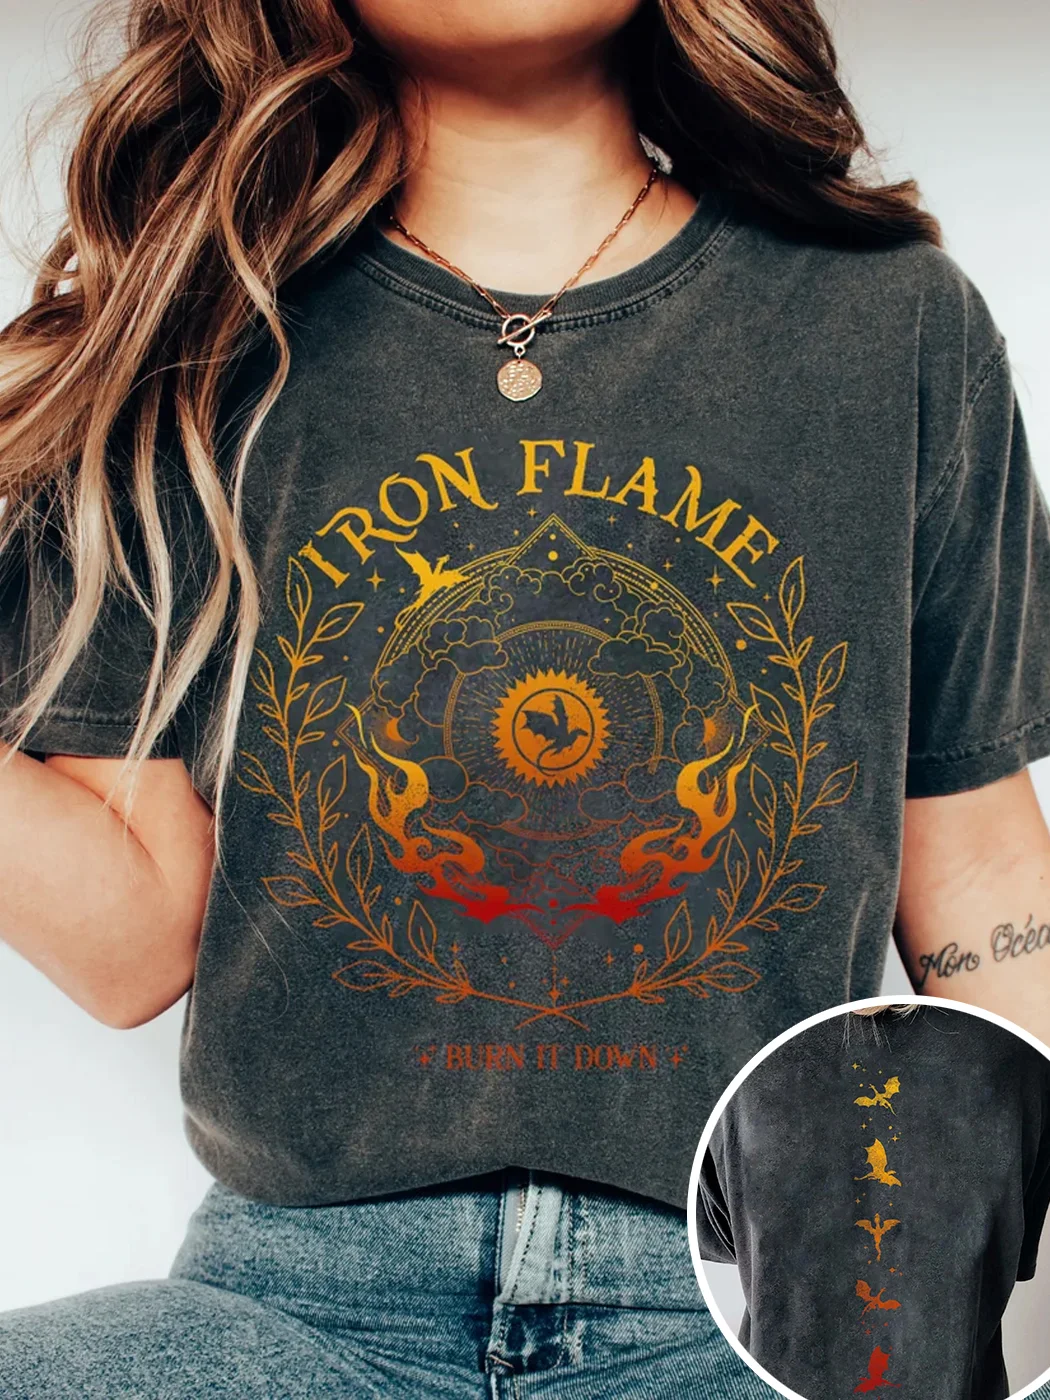 Iron Flame Shirt, Fourth Wing Shirt / DarkAcademias /Darkacademias